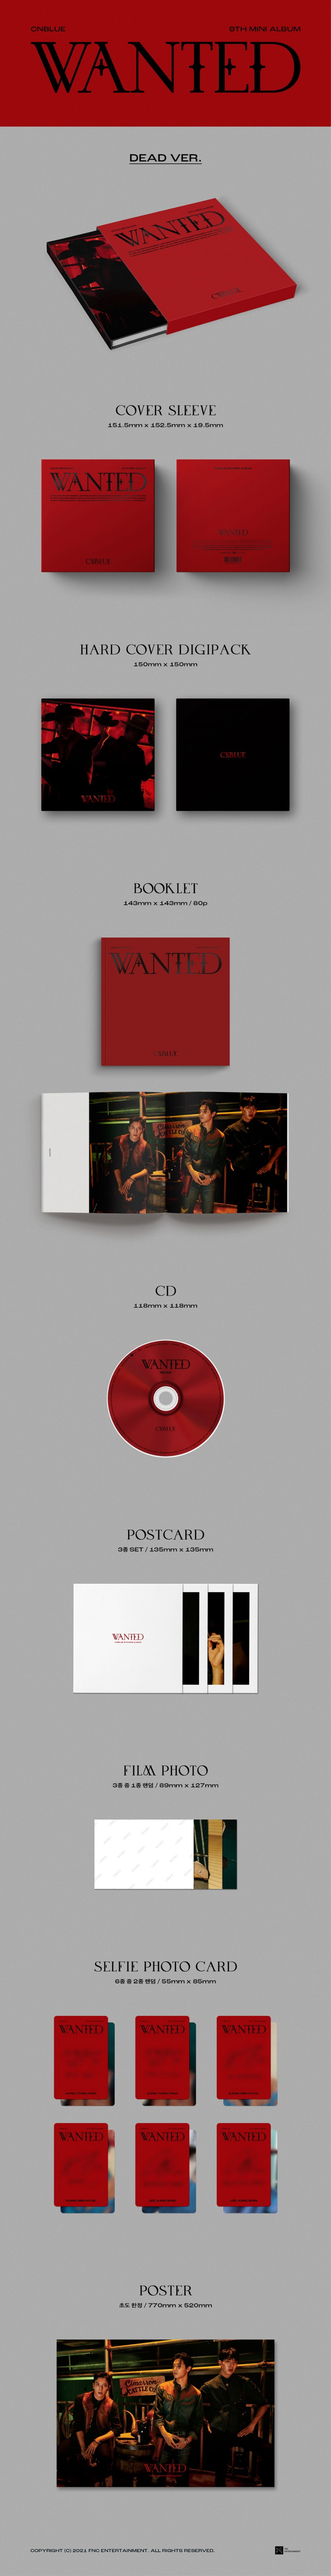 CNBLUE - 9th Mini Album [WANTED](Dead+Alive Ver) CNBLUE CNBLUEAlbum WANTED